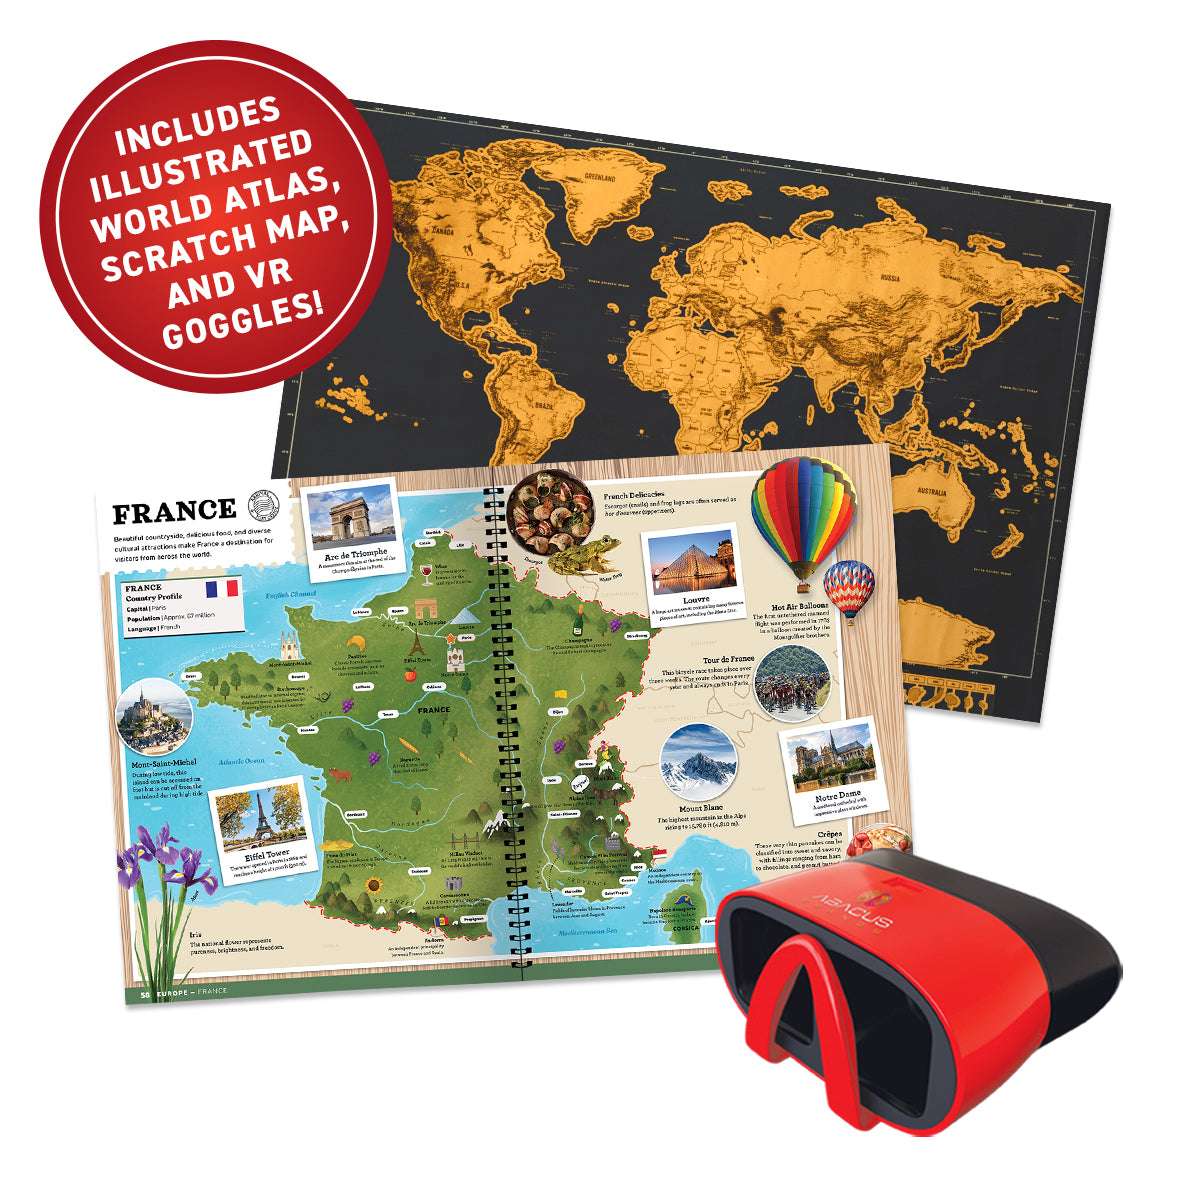 Deluxe Virtual Reality Gift Set - World Atlas!